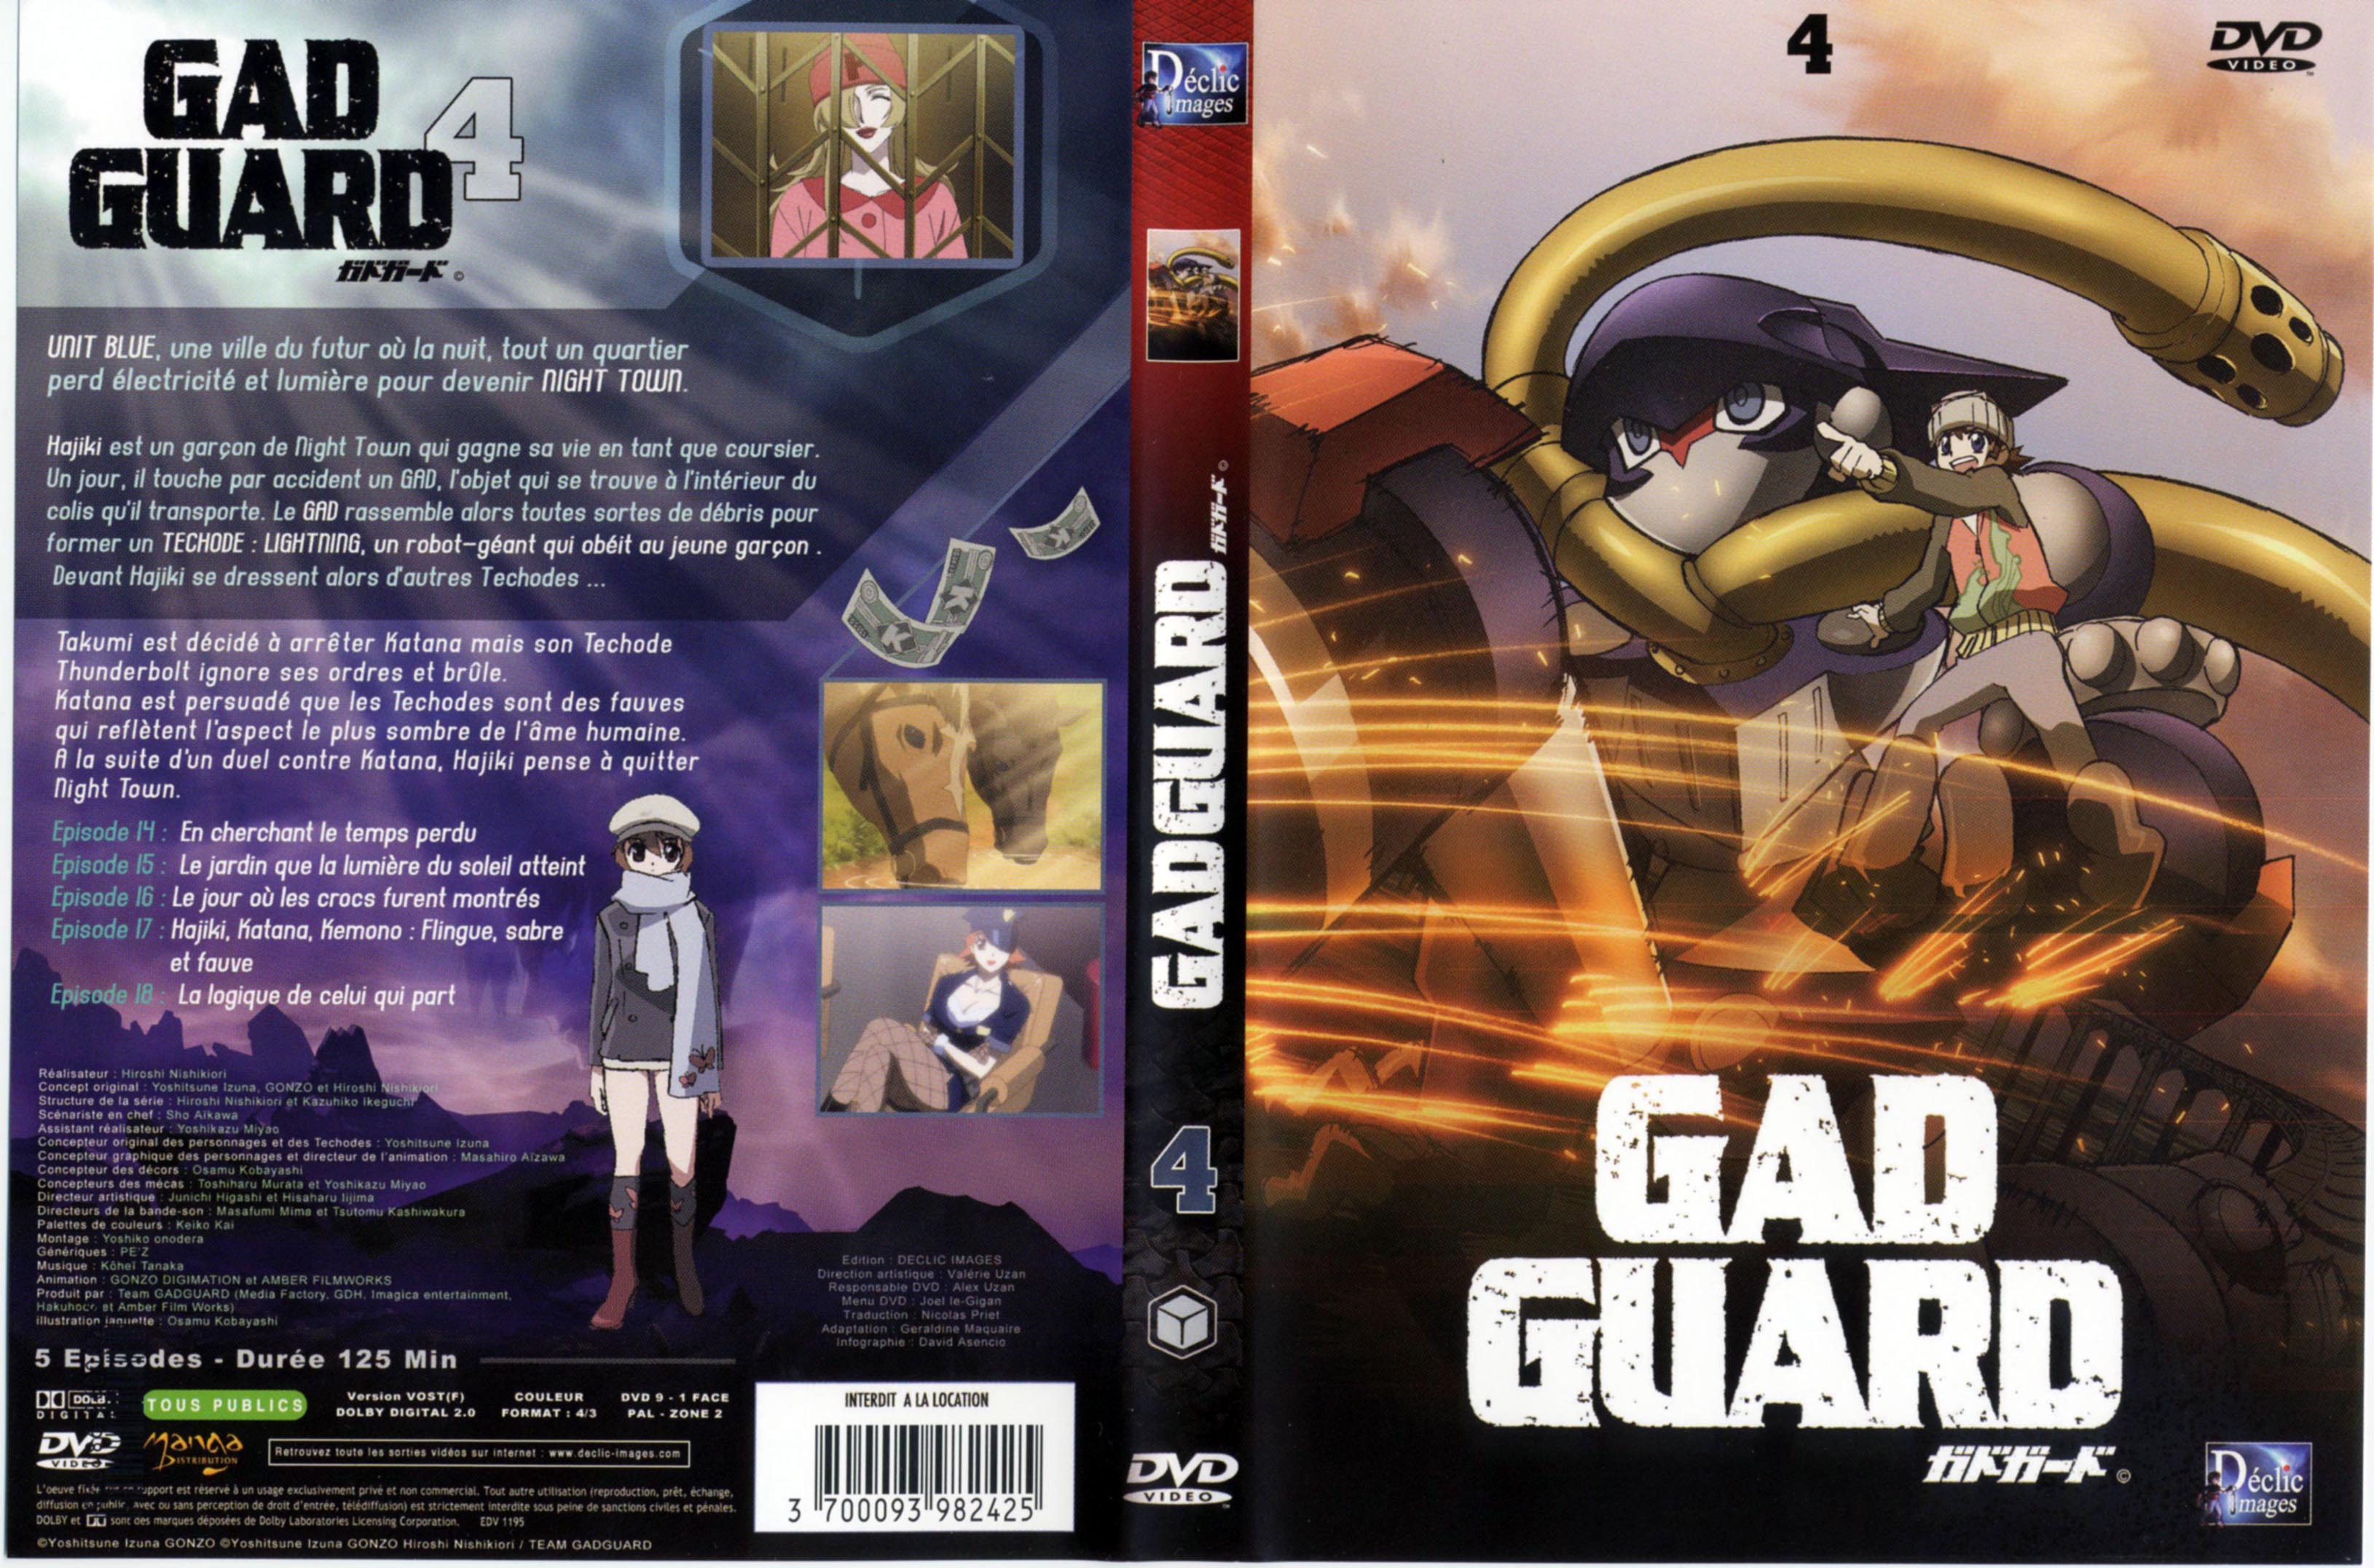 Jaquette DVD Gad Guard DVD 4